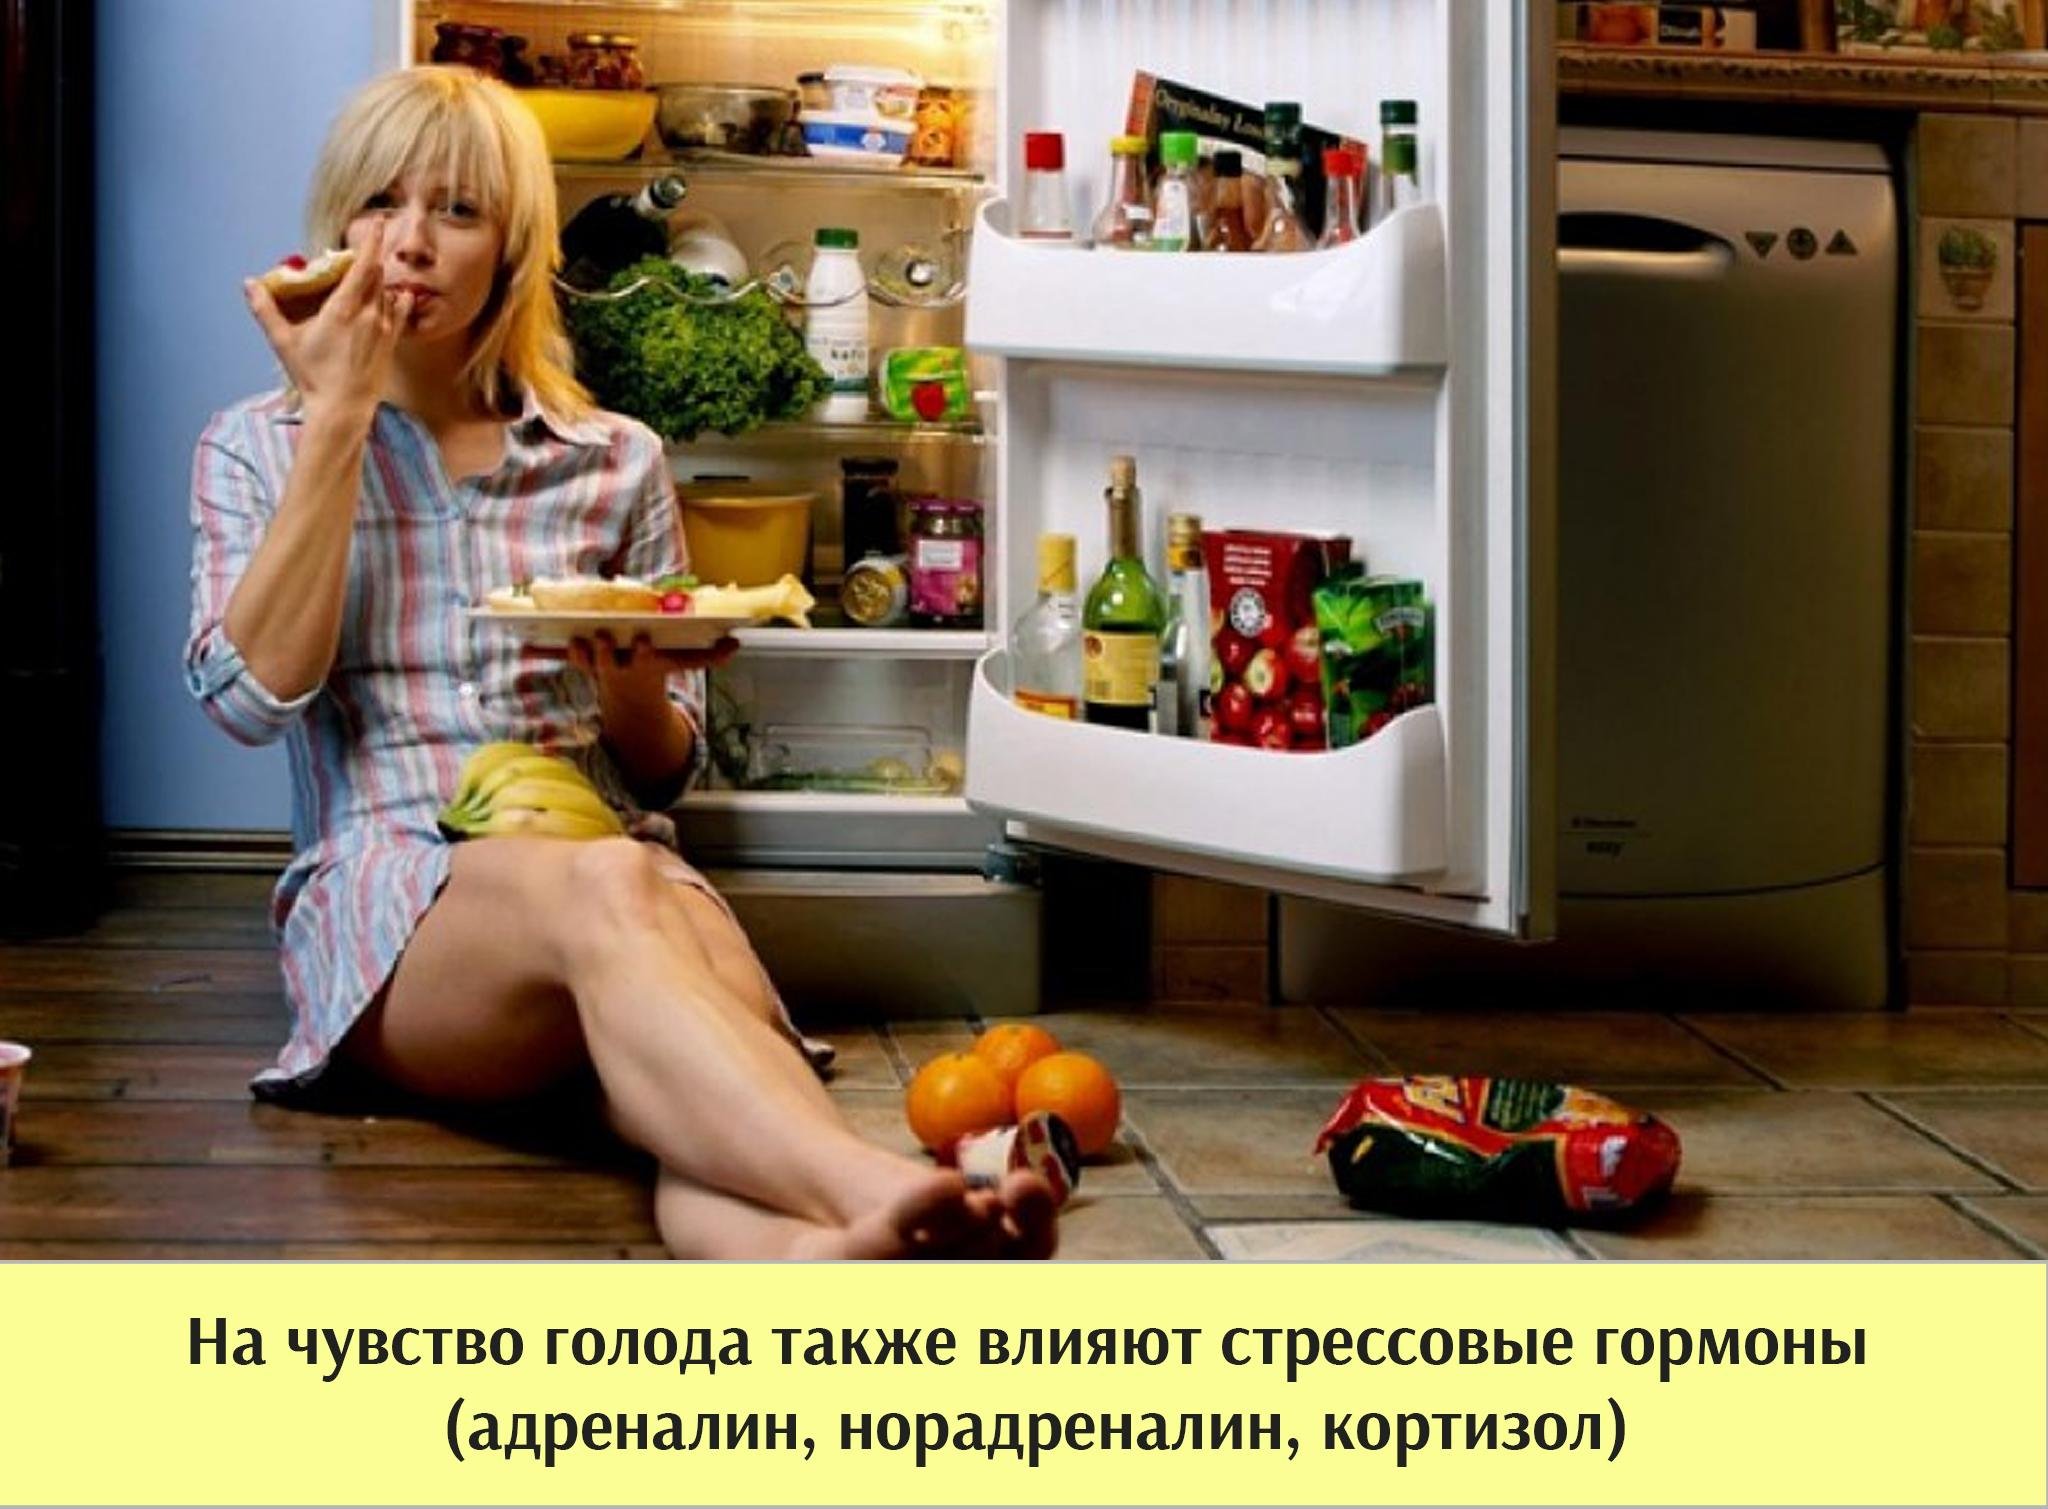 Нападение жор. Женщина у холодильника. Женщина у холодильника ночью. Девушка у холодильника. Холодильник.